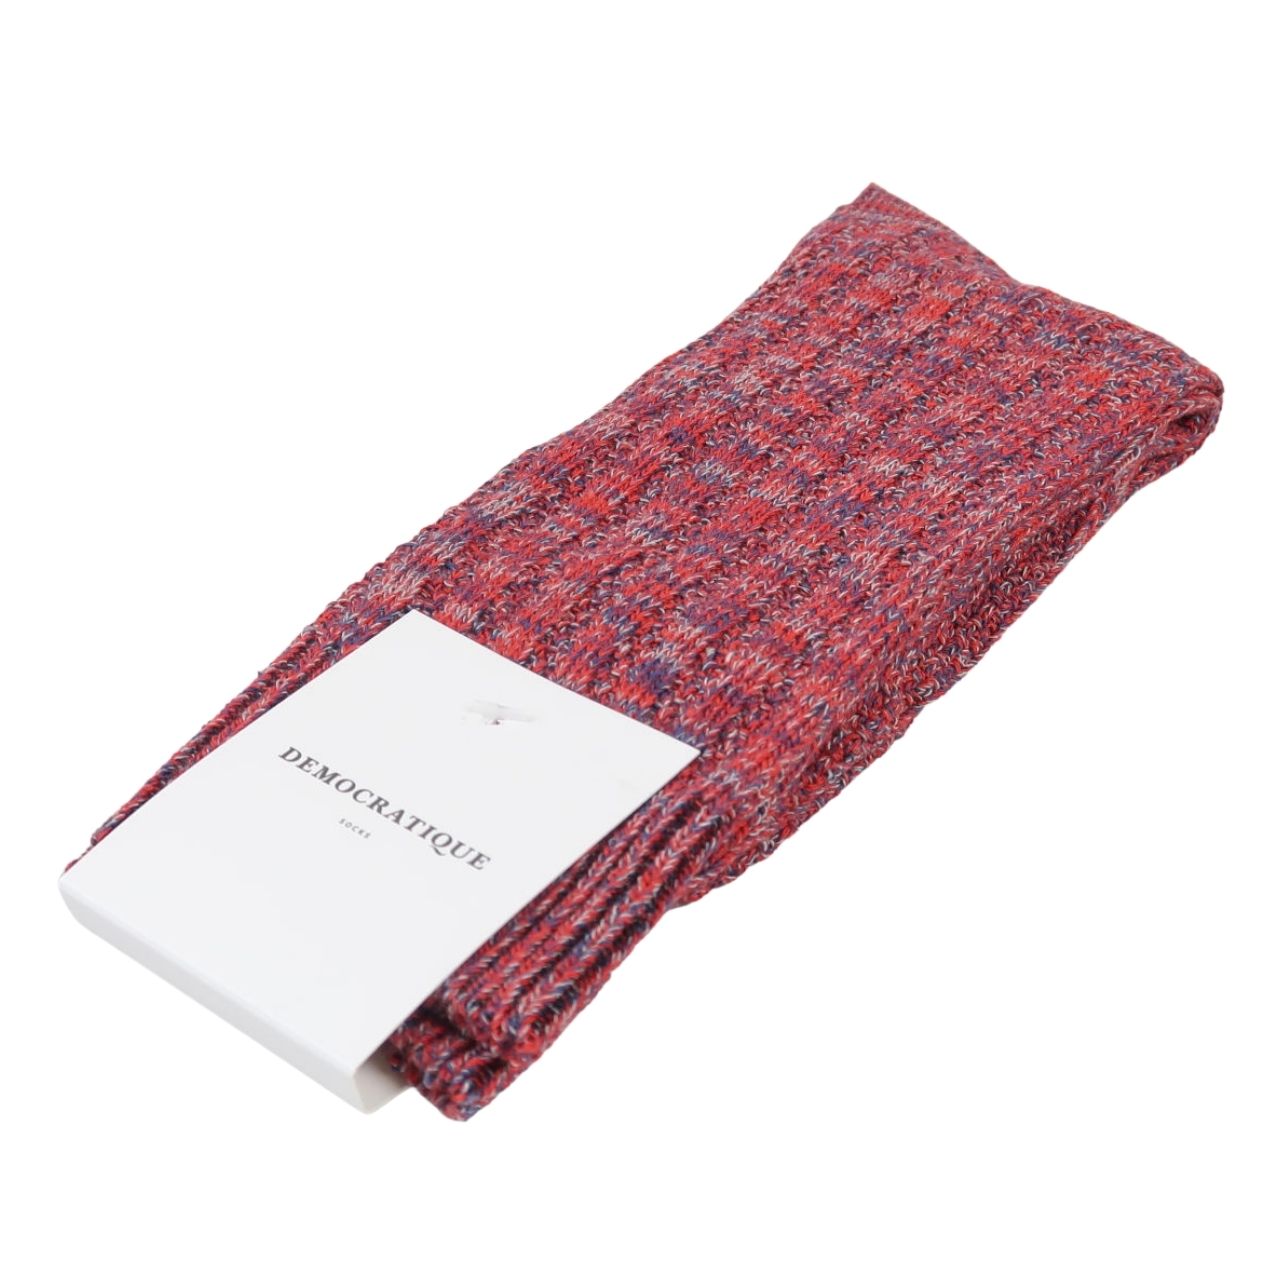 Democratique Socks Men’s Socks – Relax Schooner Knit – Pearl Red/Dark Ocean Blue/Light Grey Melange